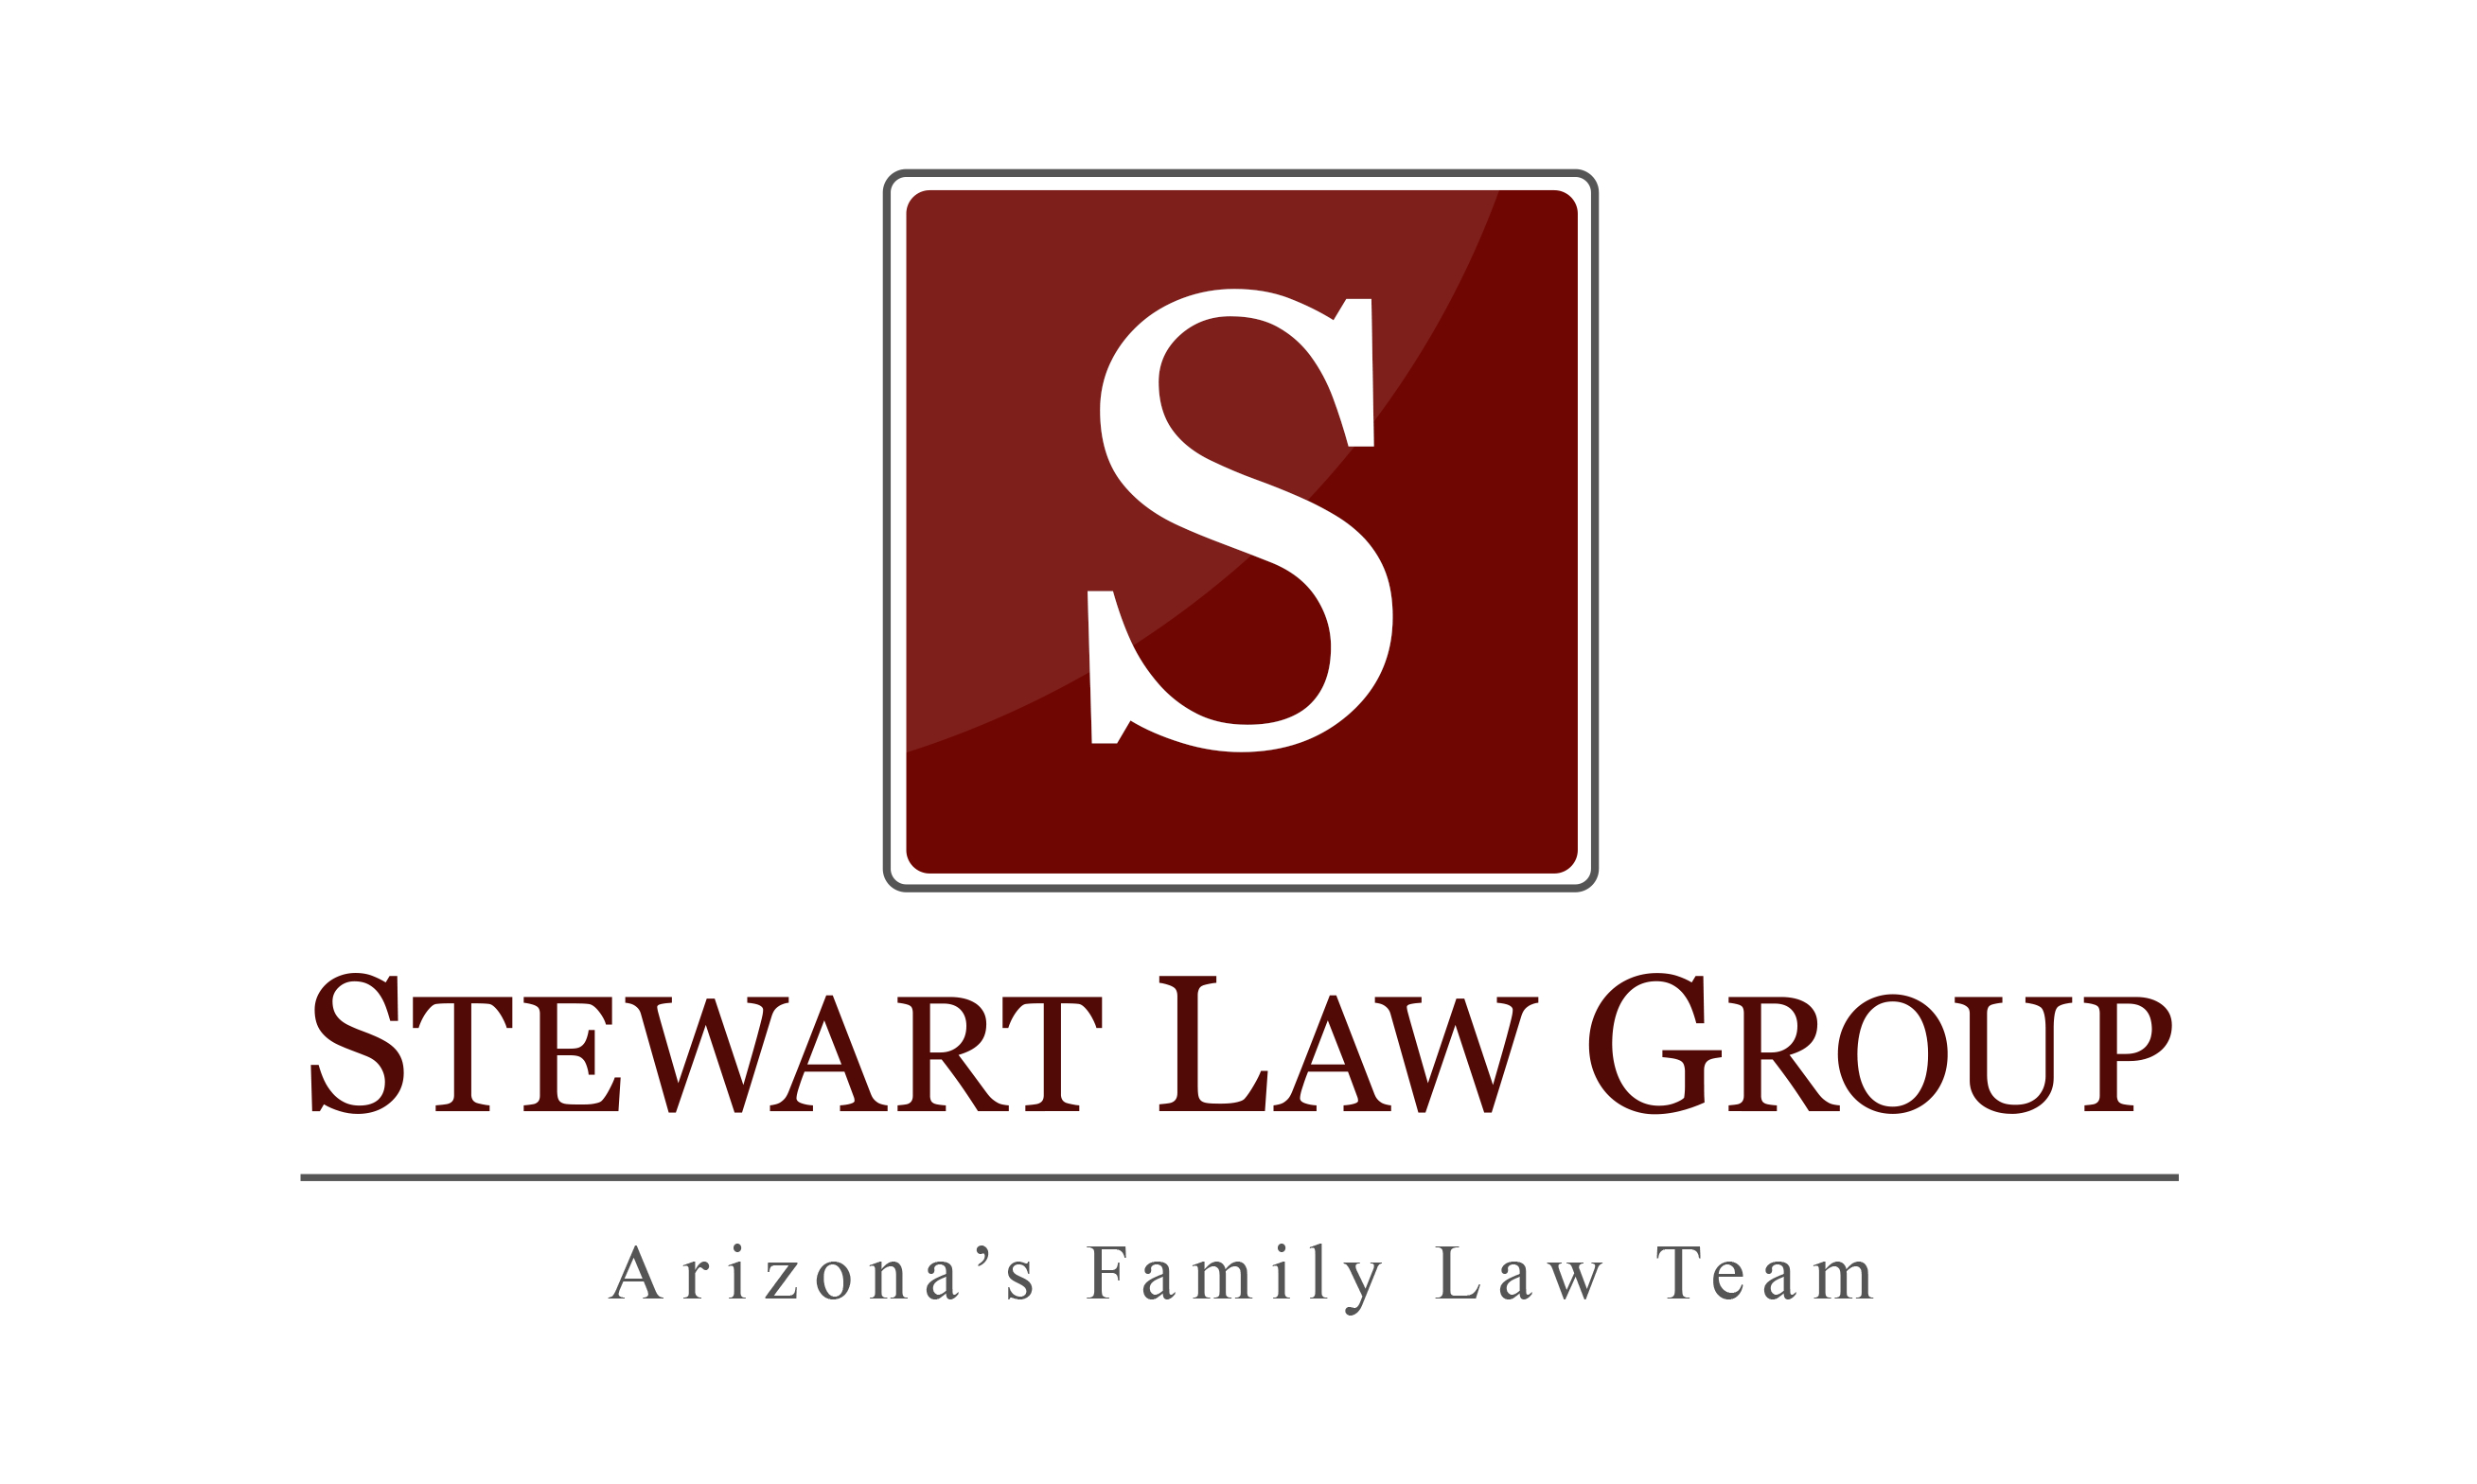 Stewart Law Group, Mogli SMS & WhatsApp client.